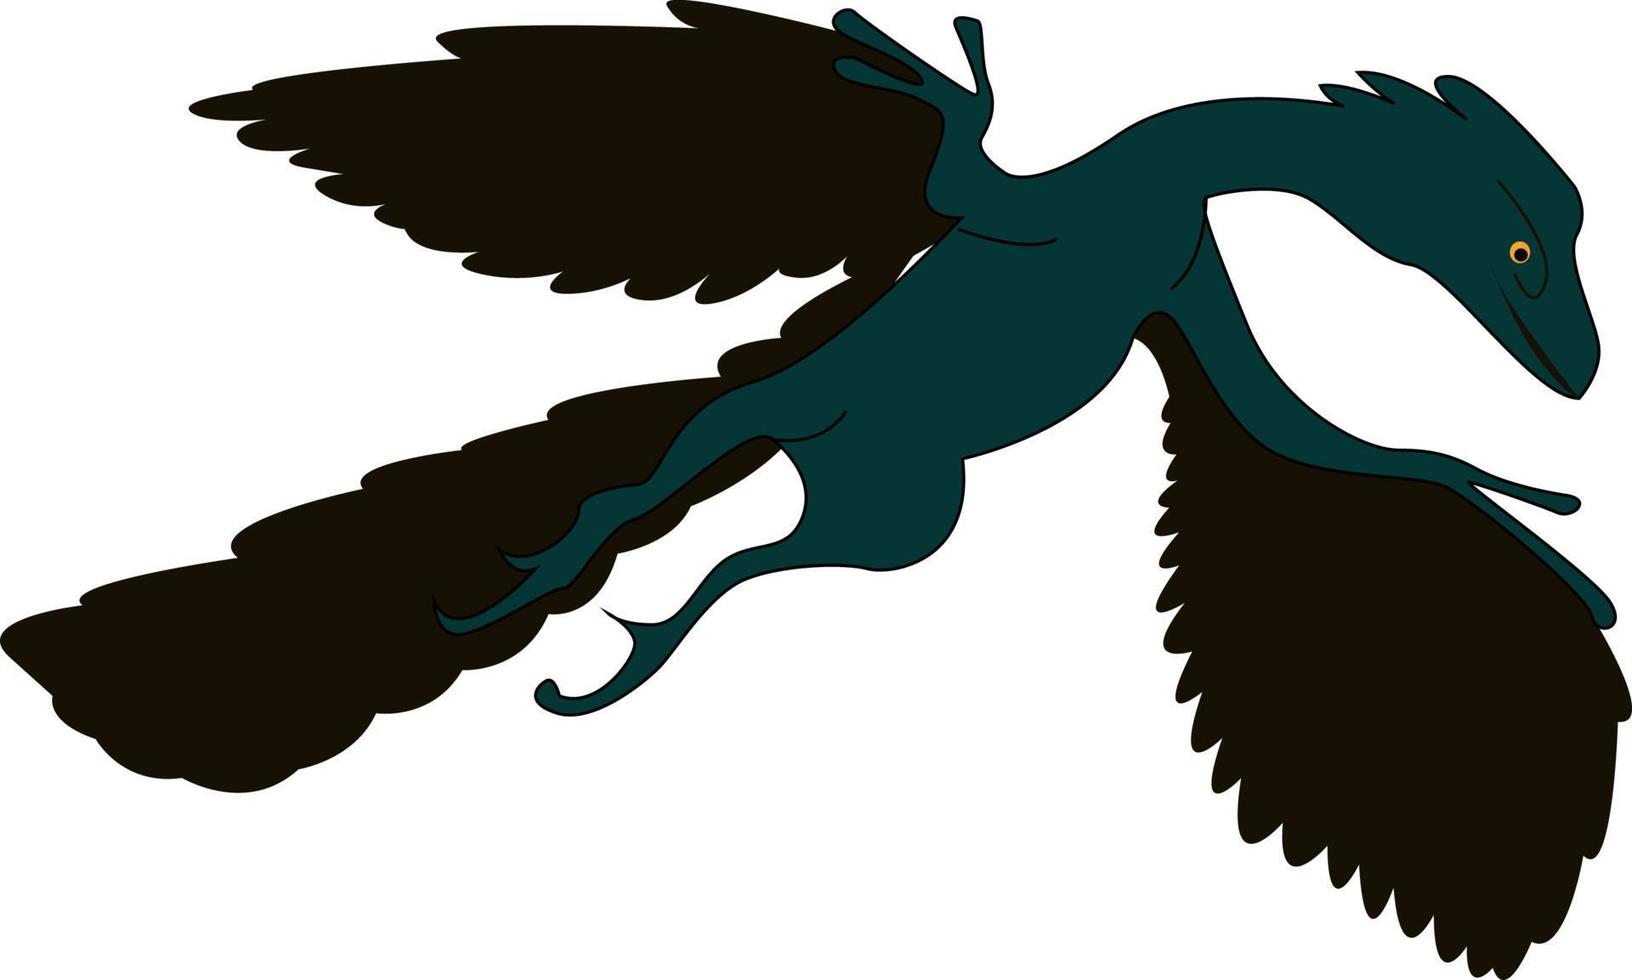 flygande archaeopteryx, illustration, vektor på vit bakgrund.